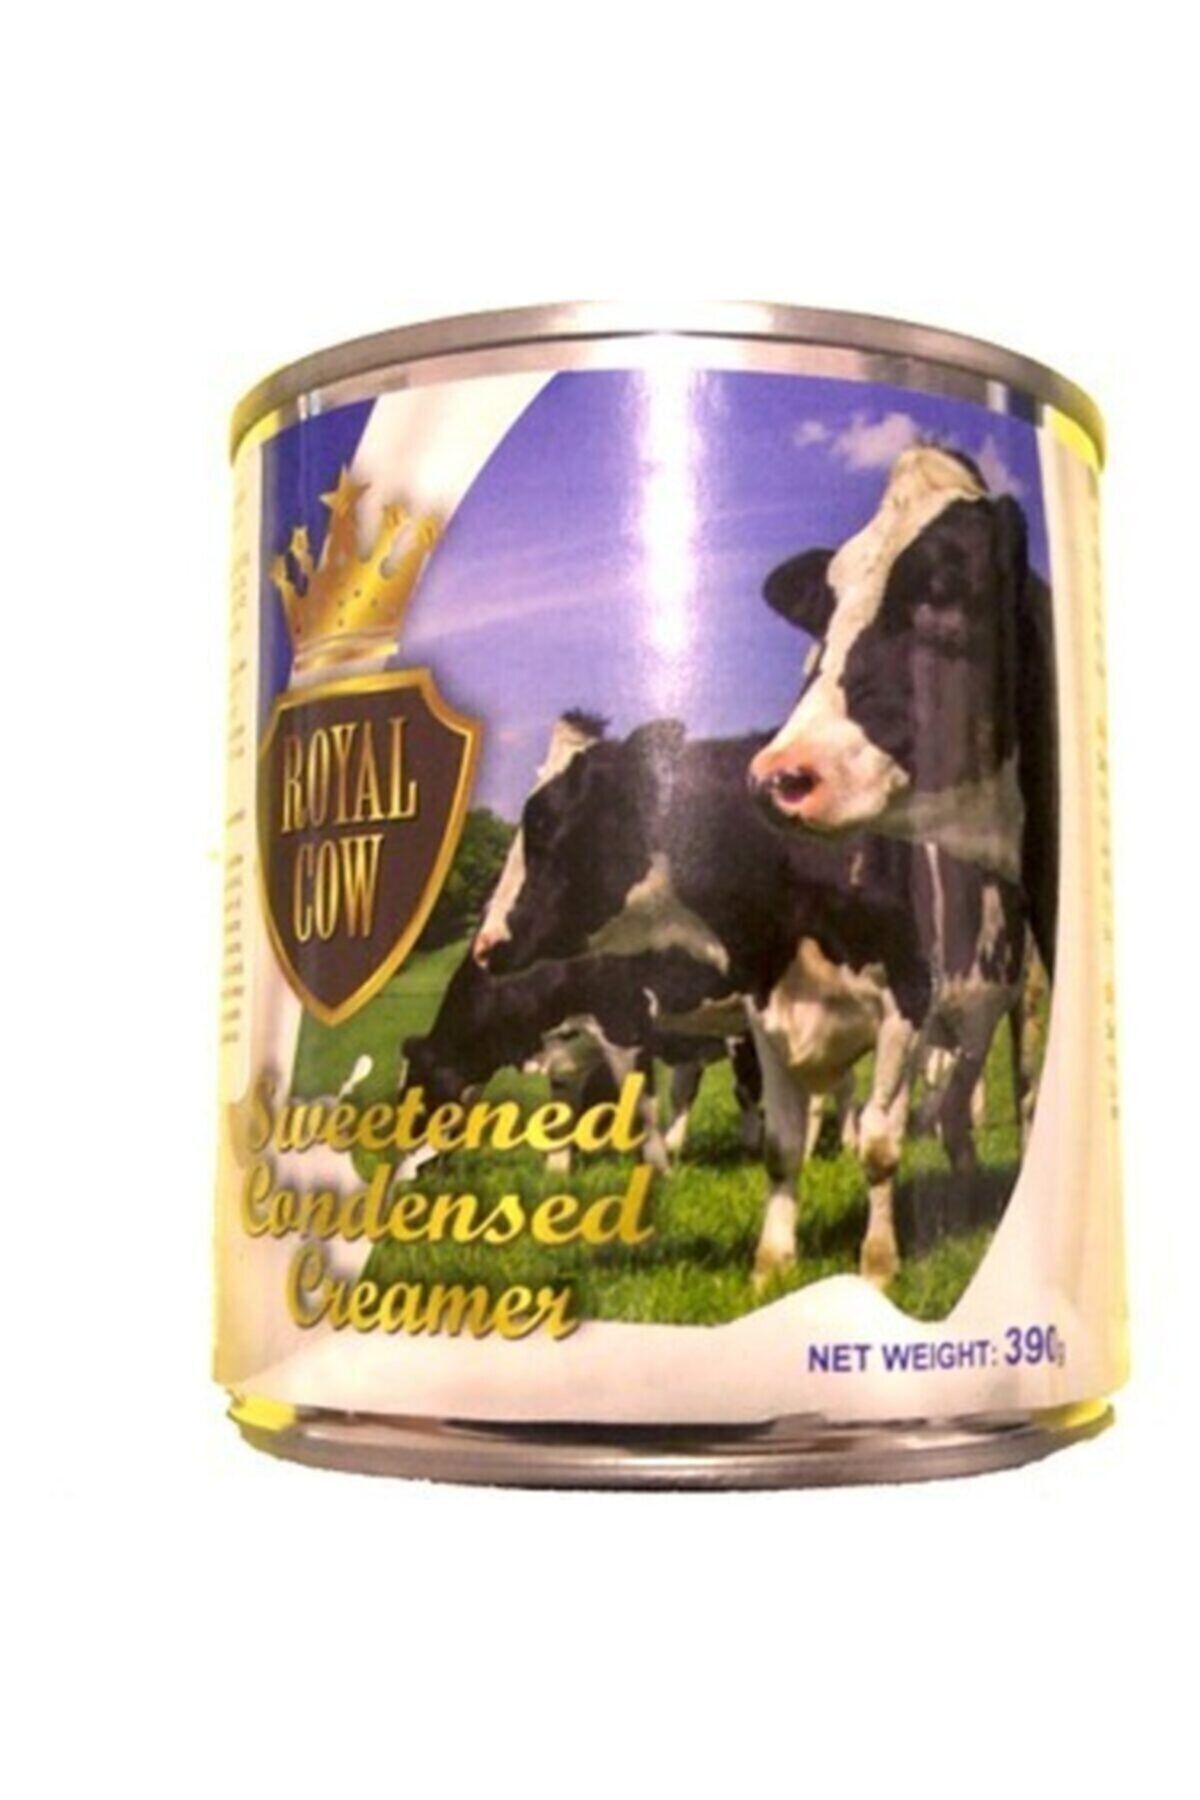 Royal Cow Sweetened Condensed Milk | Yoğun Süt - Koli 48 Adet